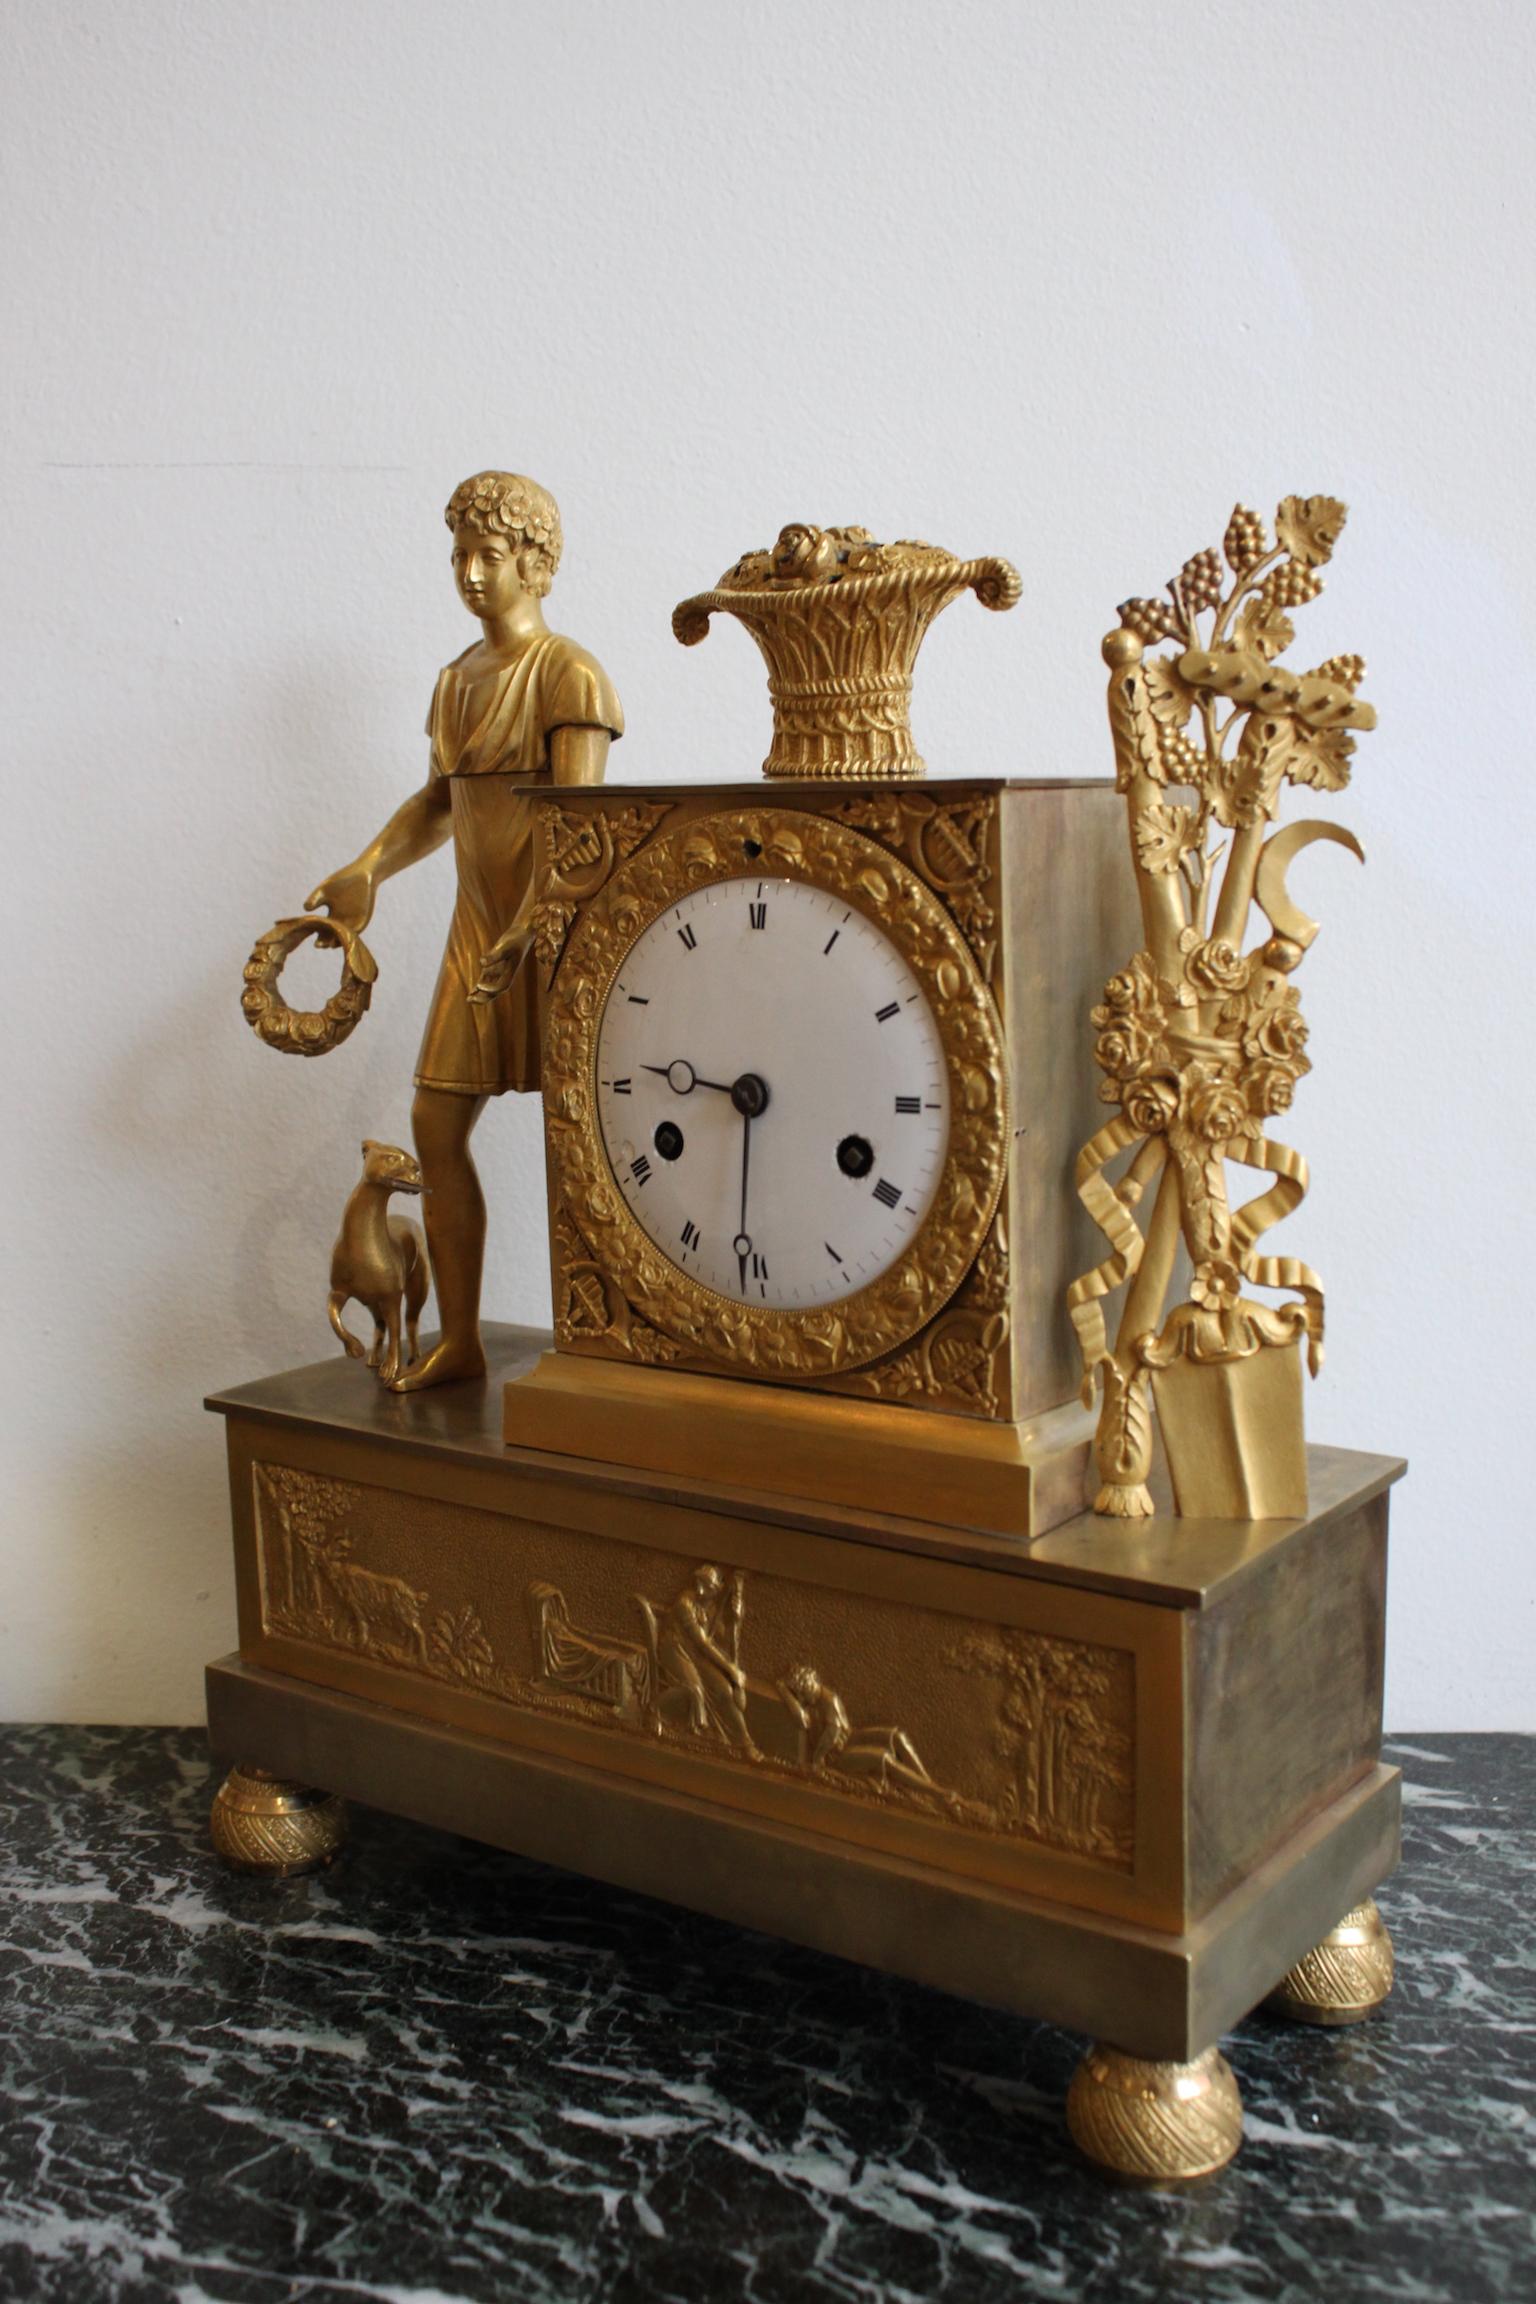 Restoration clock in gilded bronze. In a perfect state
Dimensions: Width 25.5 cm, depth 9cm, height 32 cm.